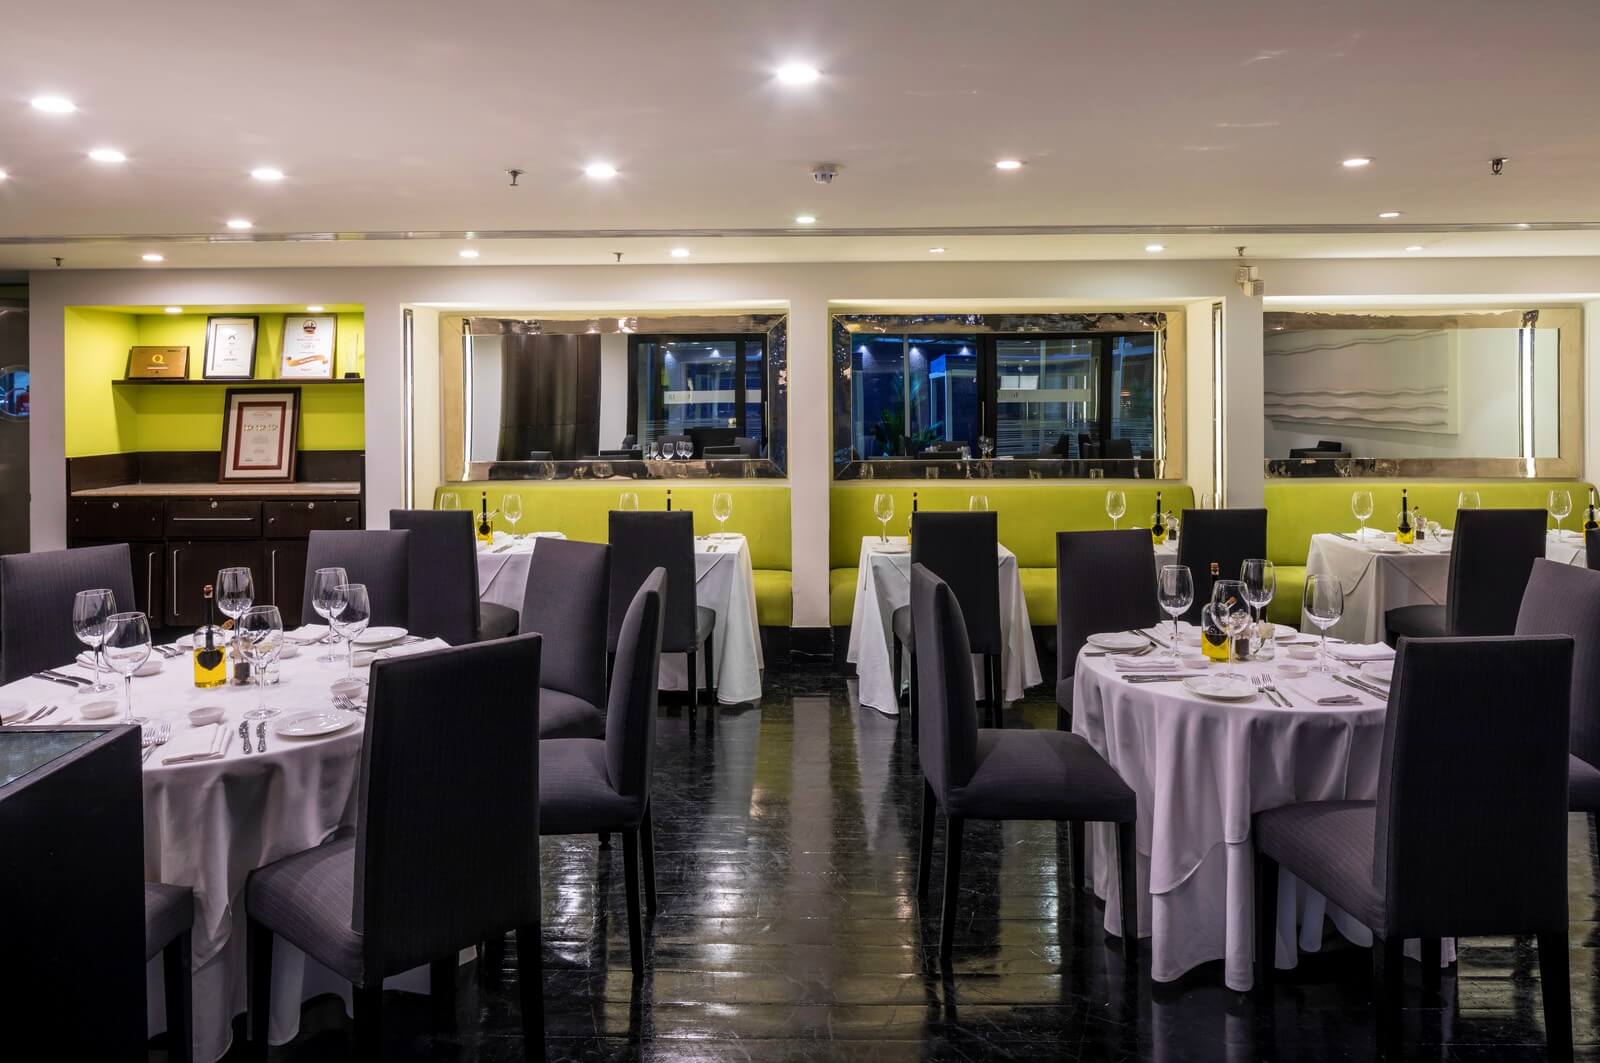 Italia Restaurant at The Park Hotels Bangalore